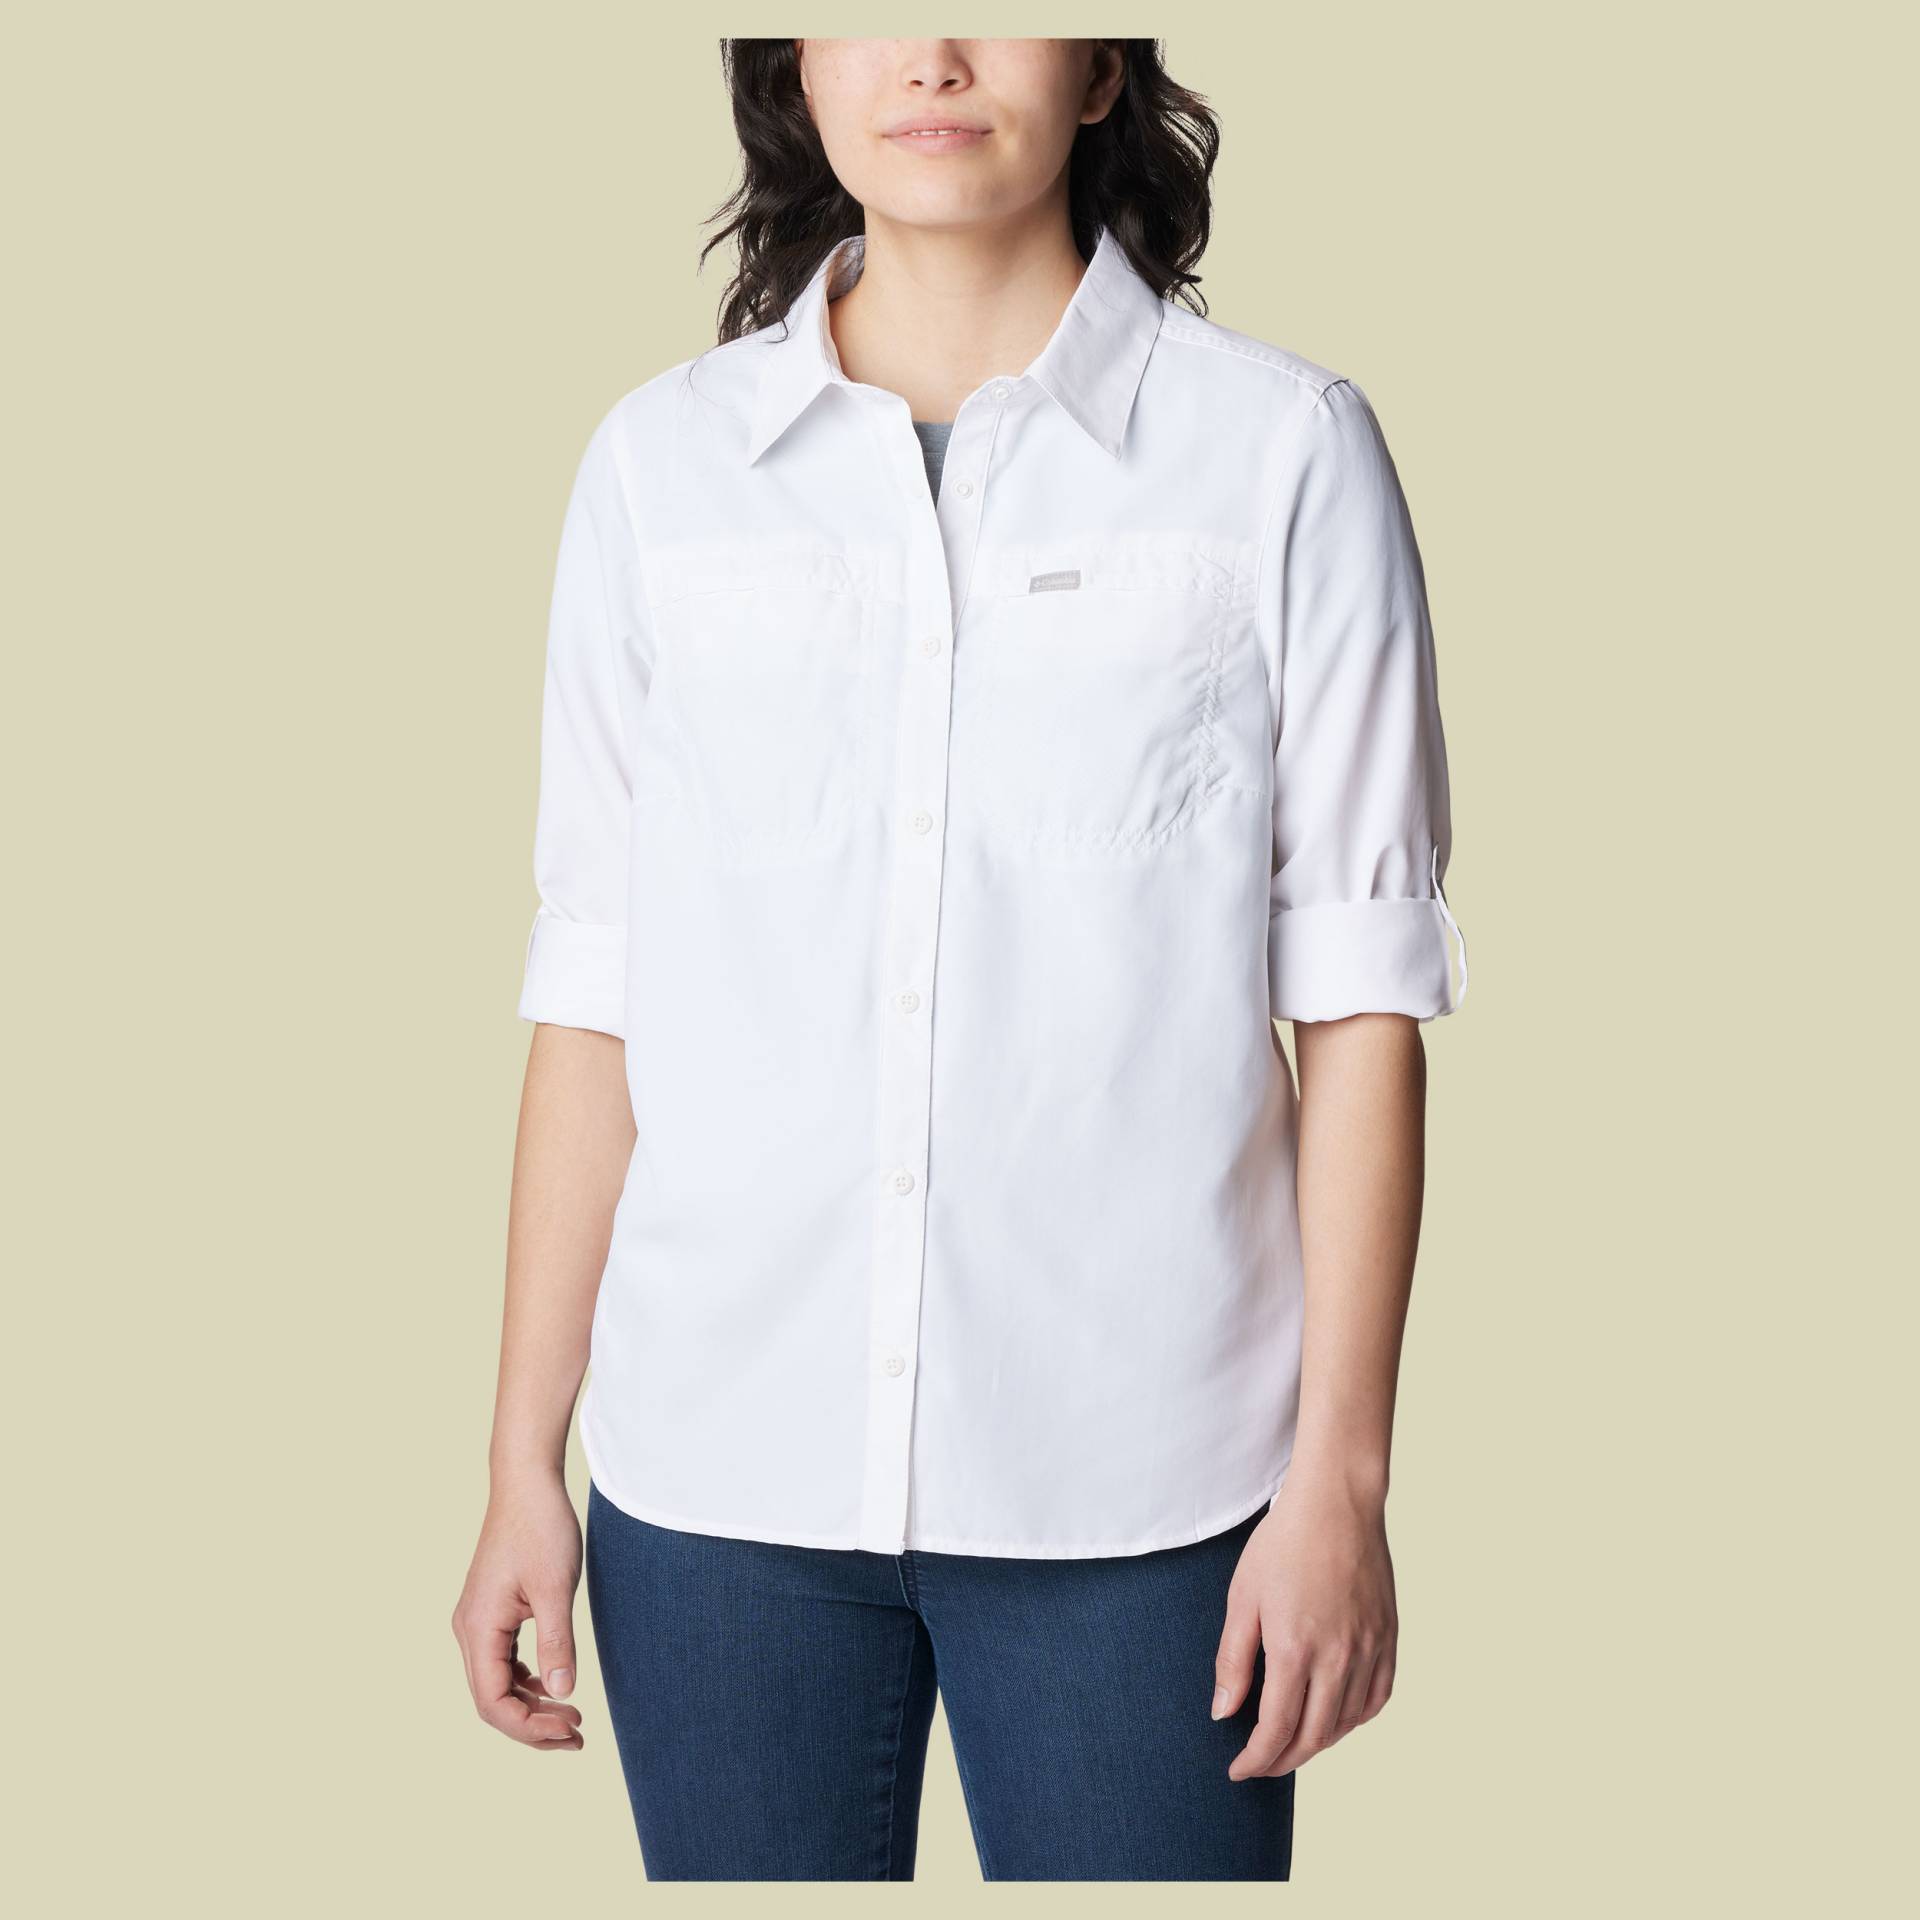 Silver Ridge 3.0 EUR Long Sleeve Shirt Women Größe XXL Farbe white von Columbia